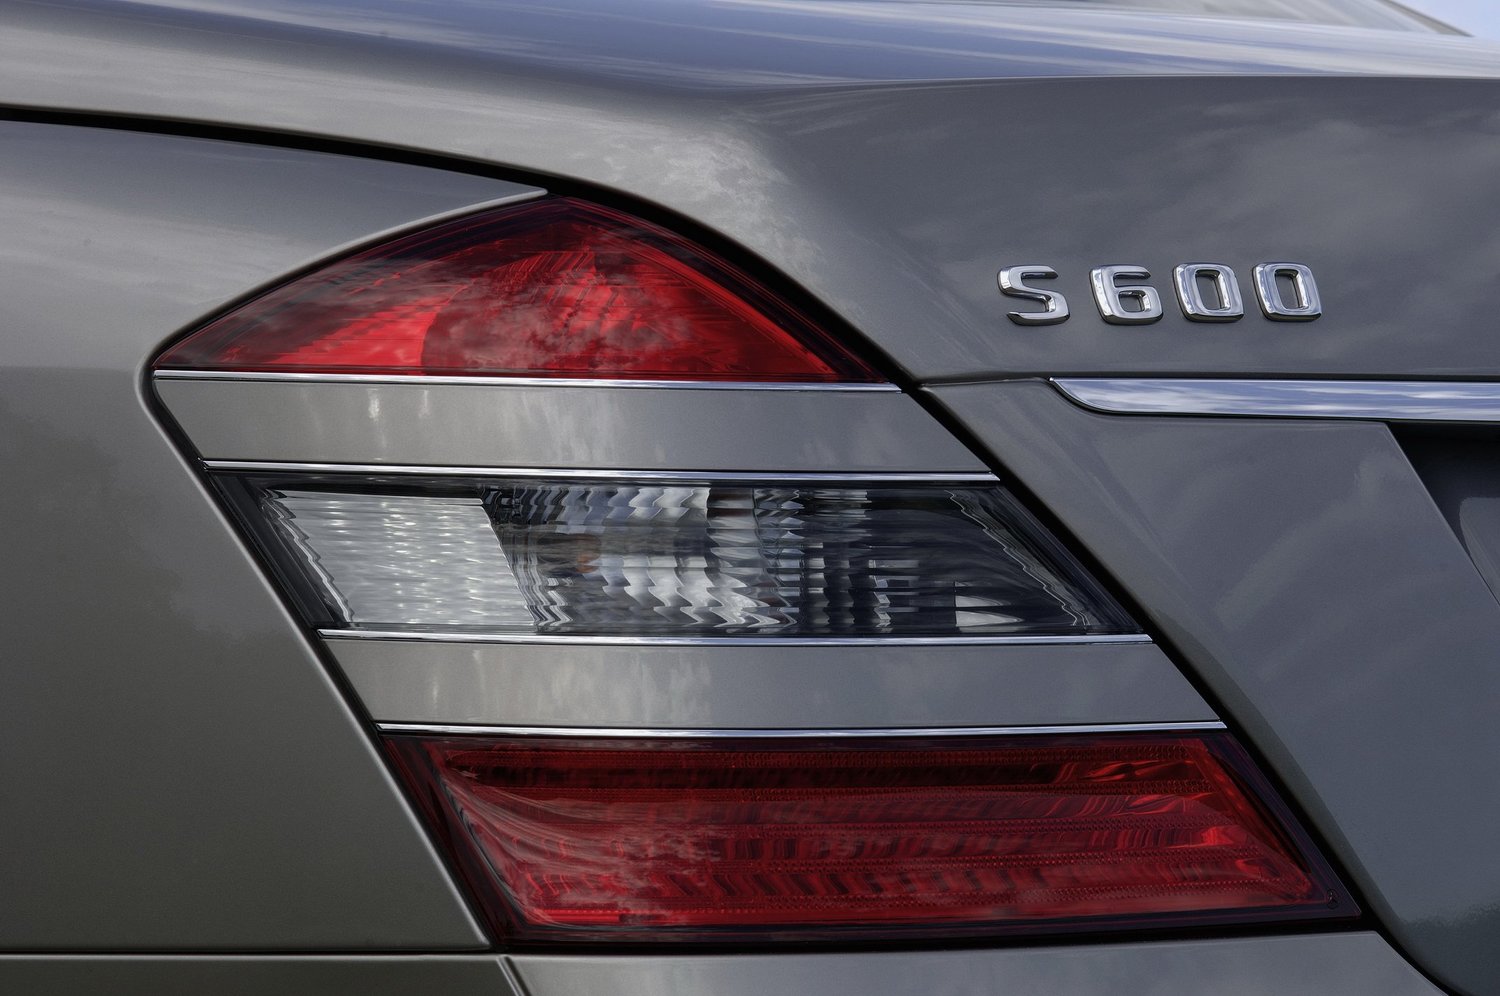 седан Long Mercedes-Benz S-klasse 2005 - 2009г выпуска модификация 3.0 AT (235 л.с.)